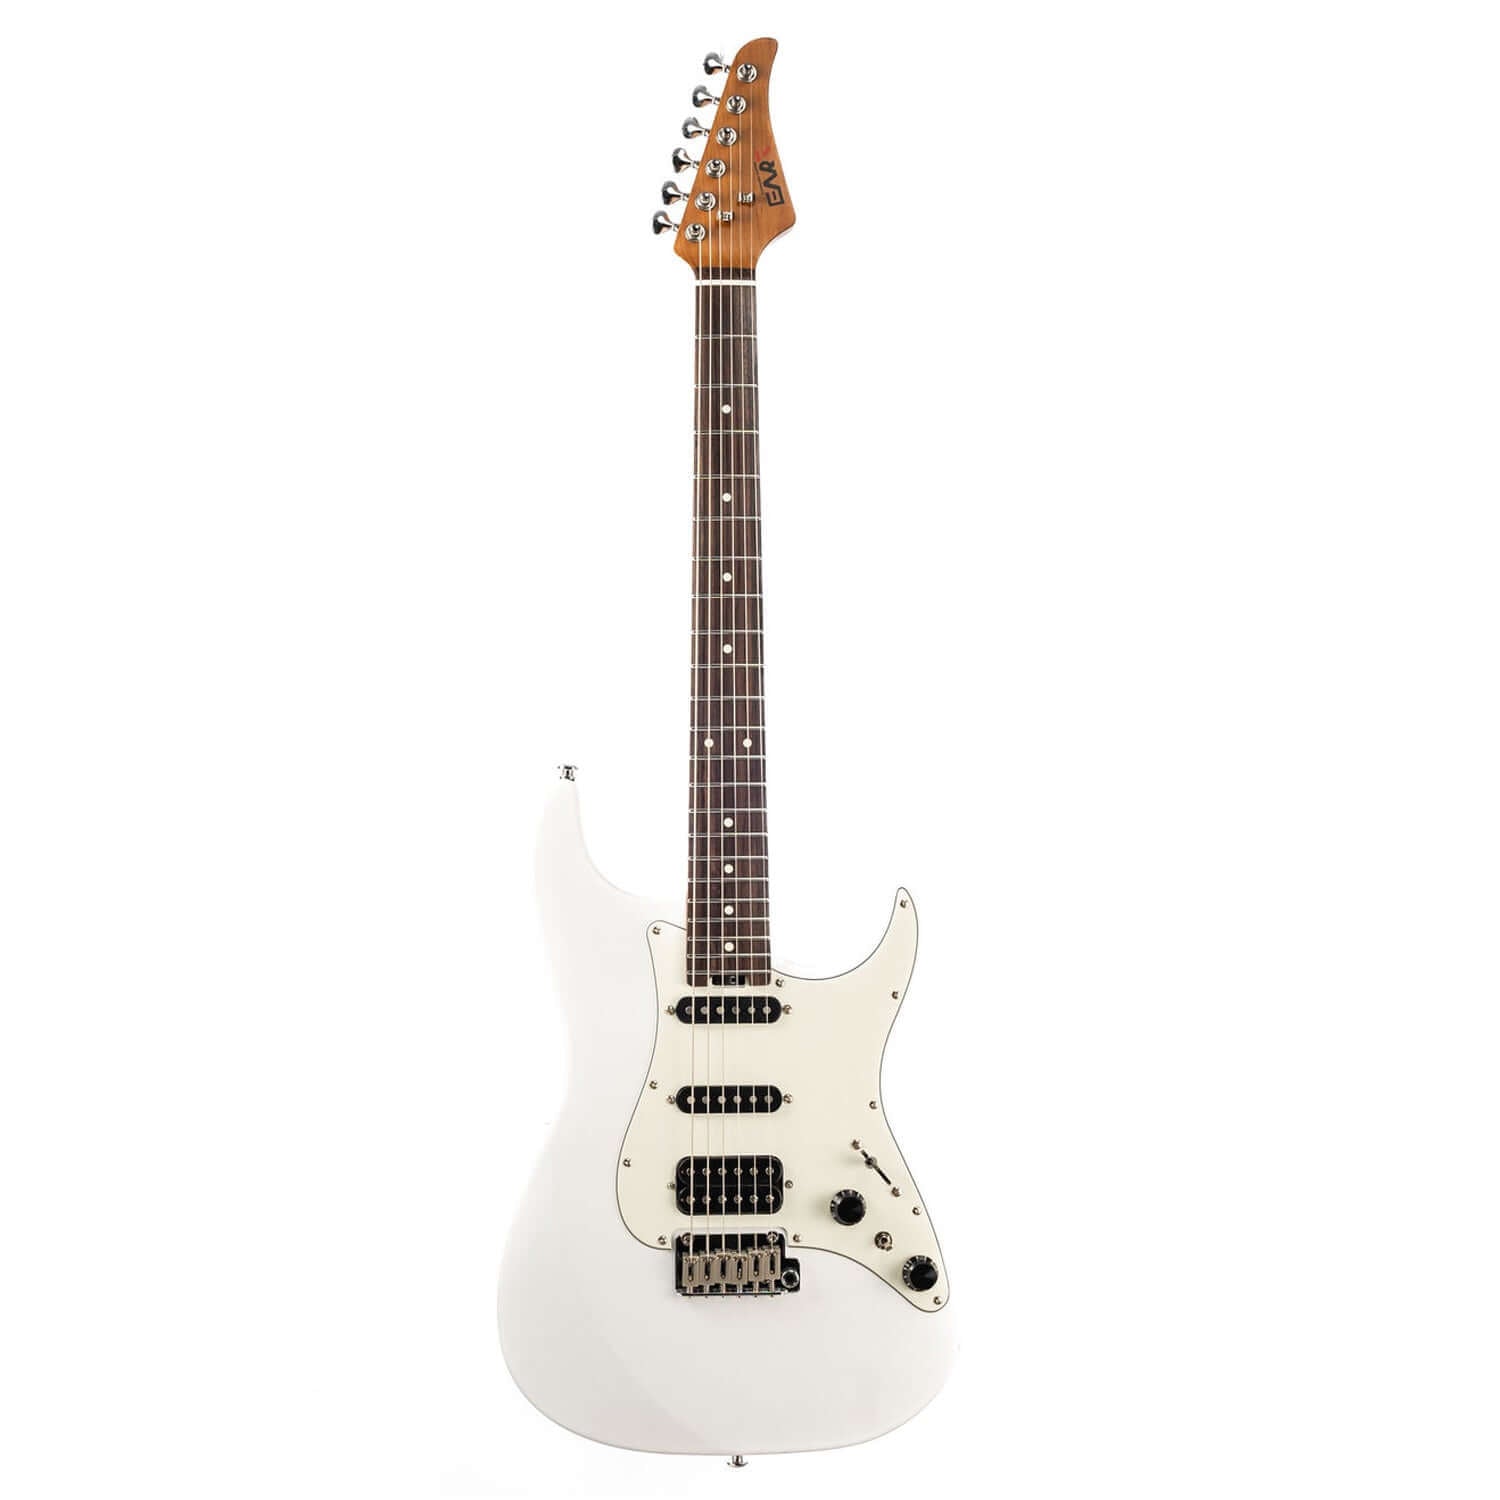 EART DMX-9 electric guitar white